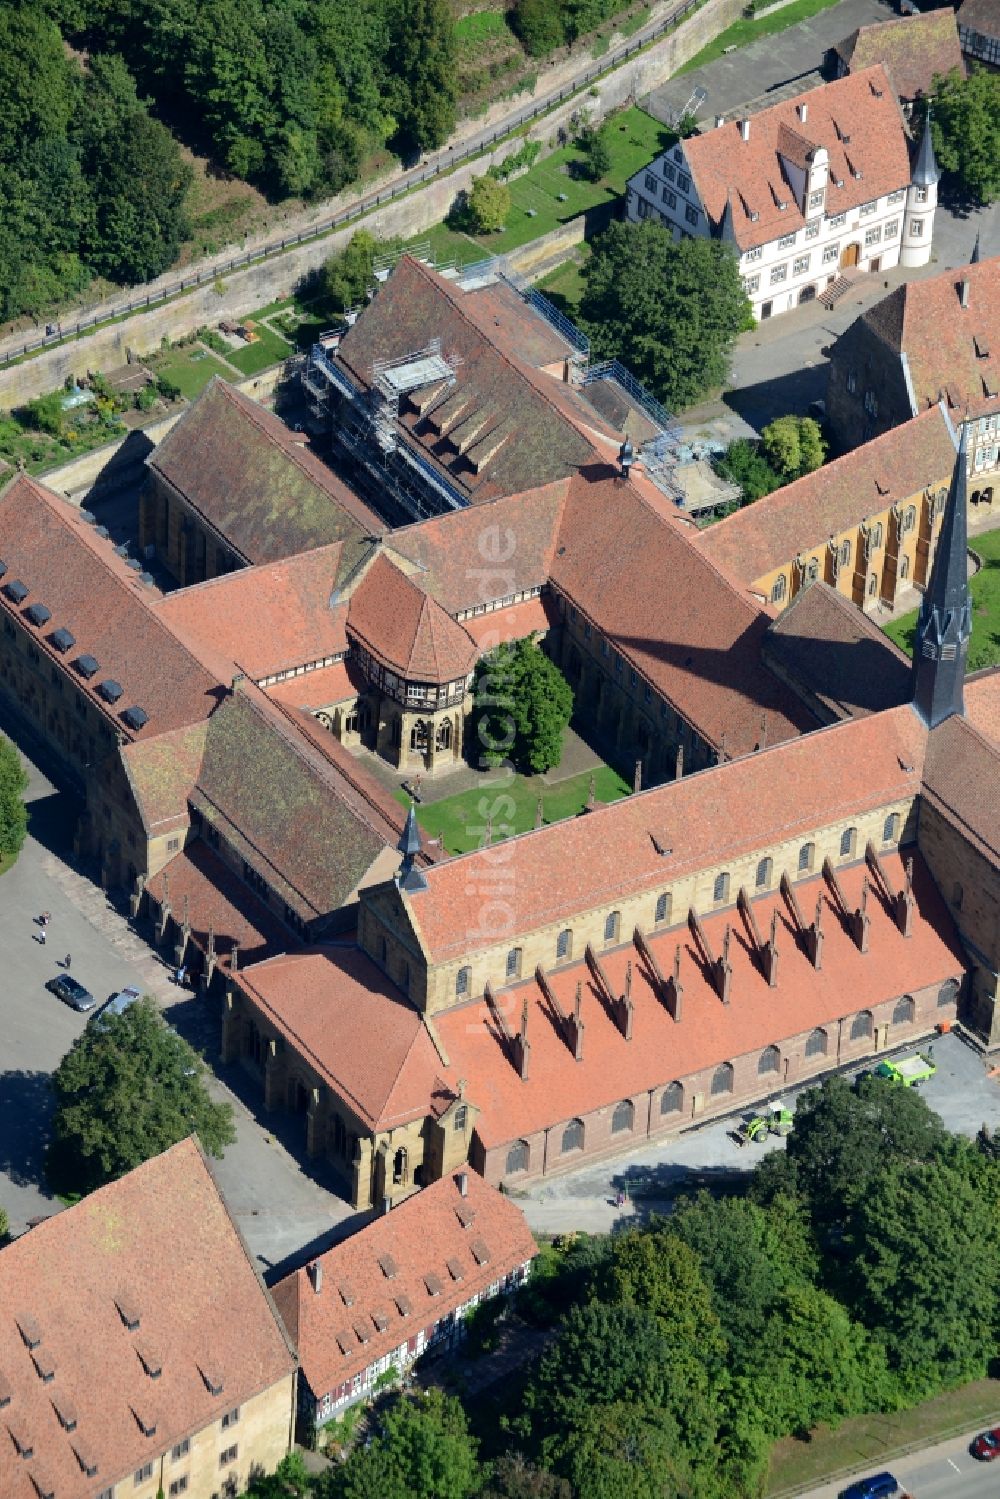 Luftbild Maulbronn - Gebäudekomplex des Klosters in Maulbronn im Bundesland Baden-Württemberg